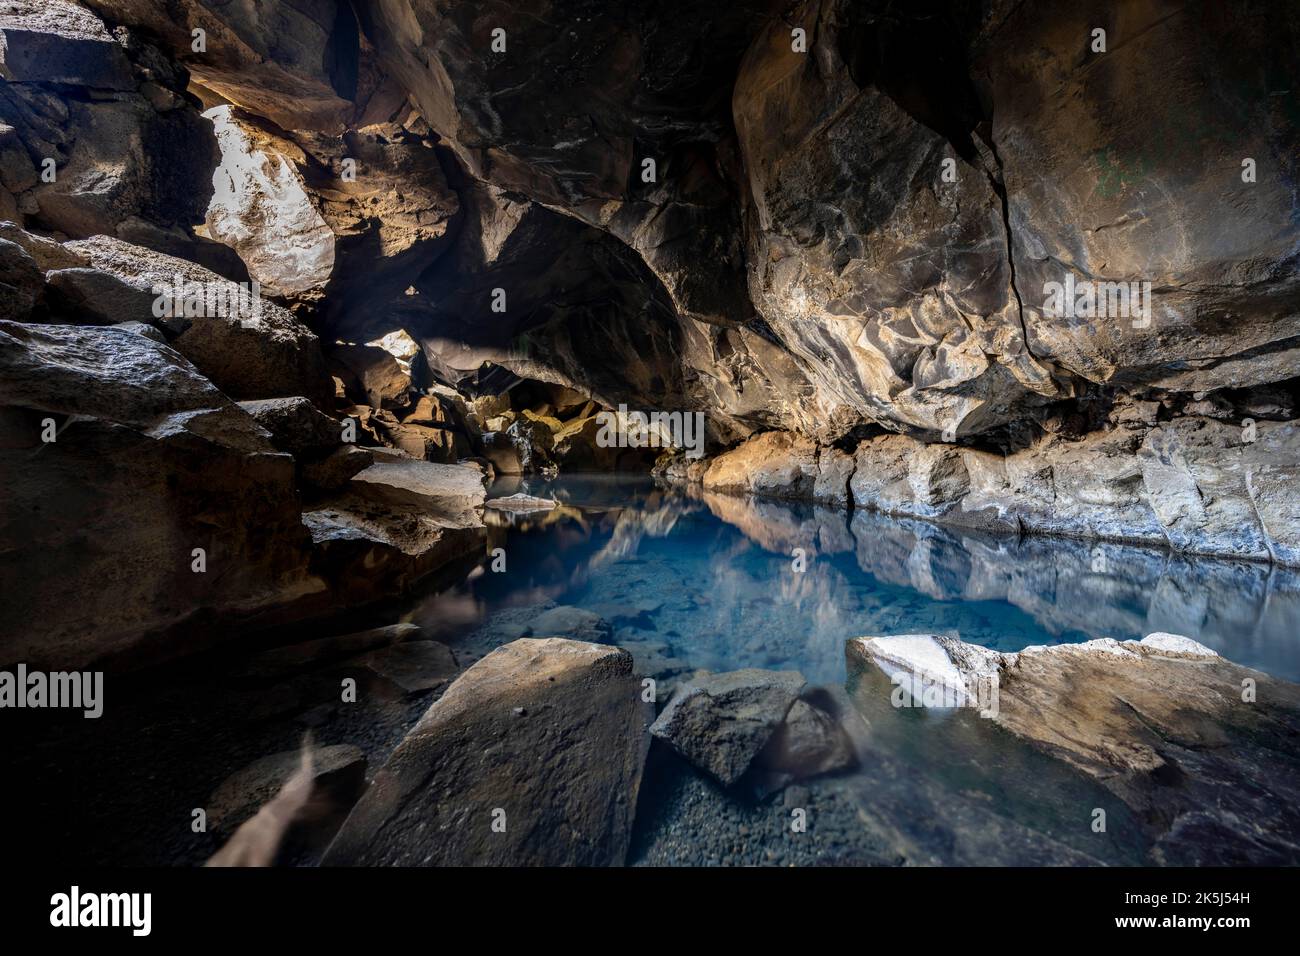 Grotte de Storagja, Silfra Fissure, Krafla, nord de l'Islande, Islande Banque D'Images